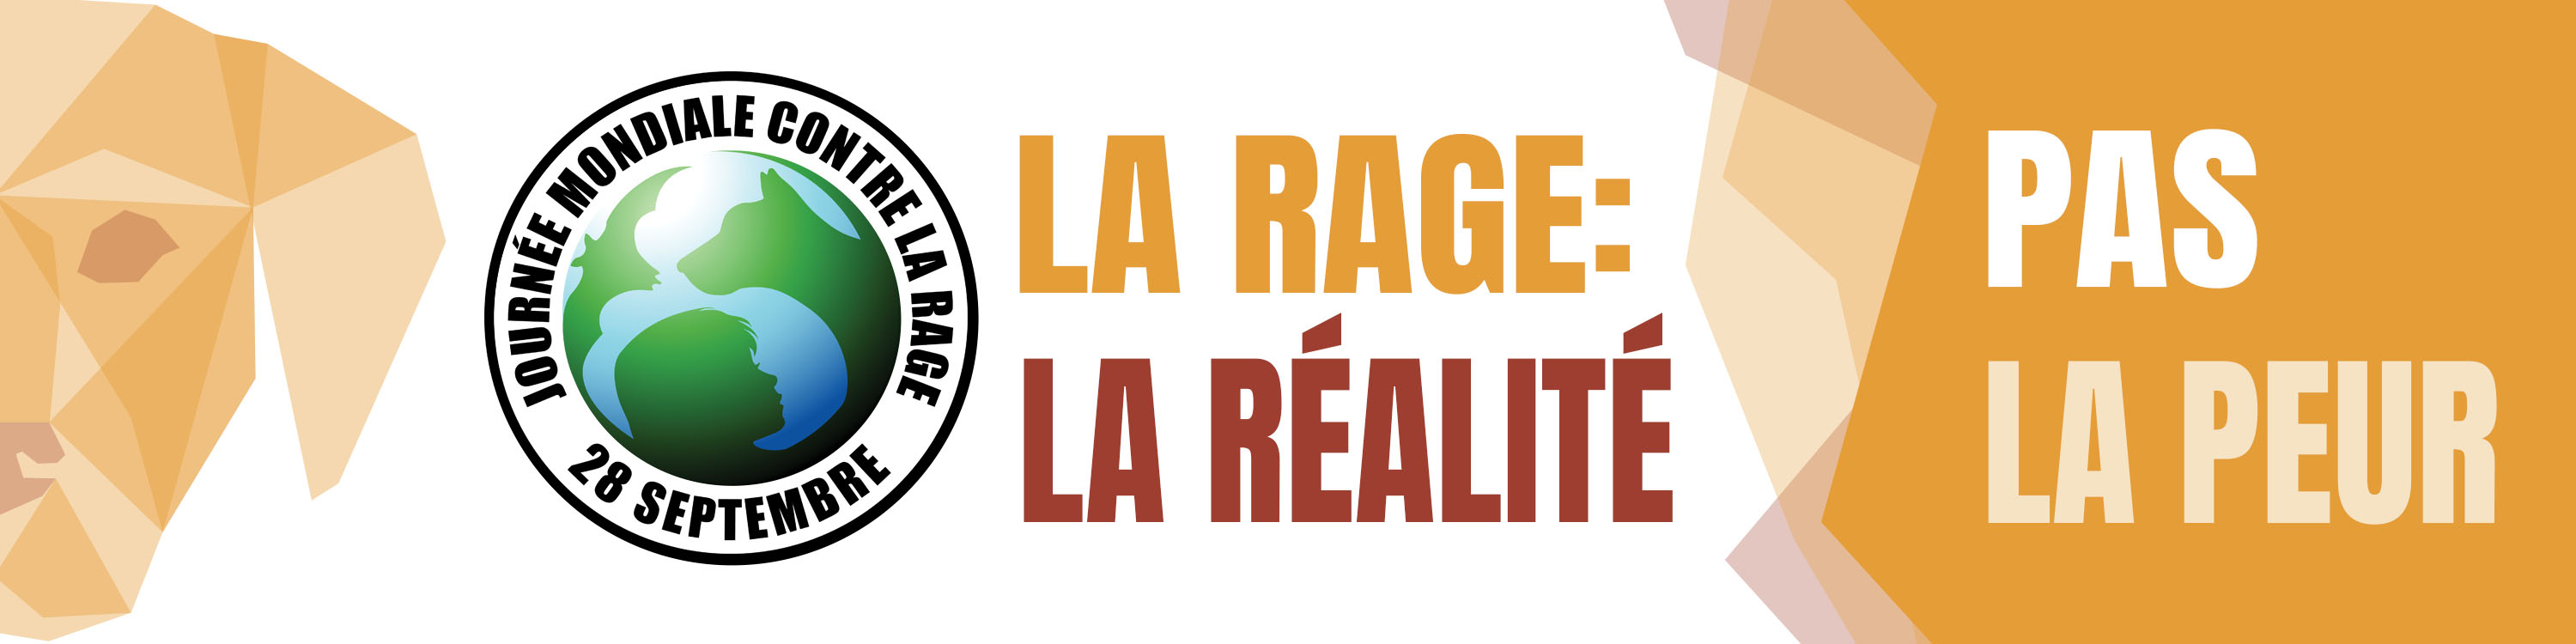 Journee Mondiale contre la Rage 2021. La Rage: La Realite, pas la Peur. GARC